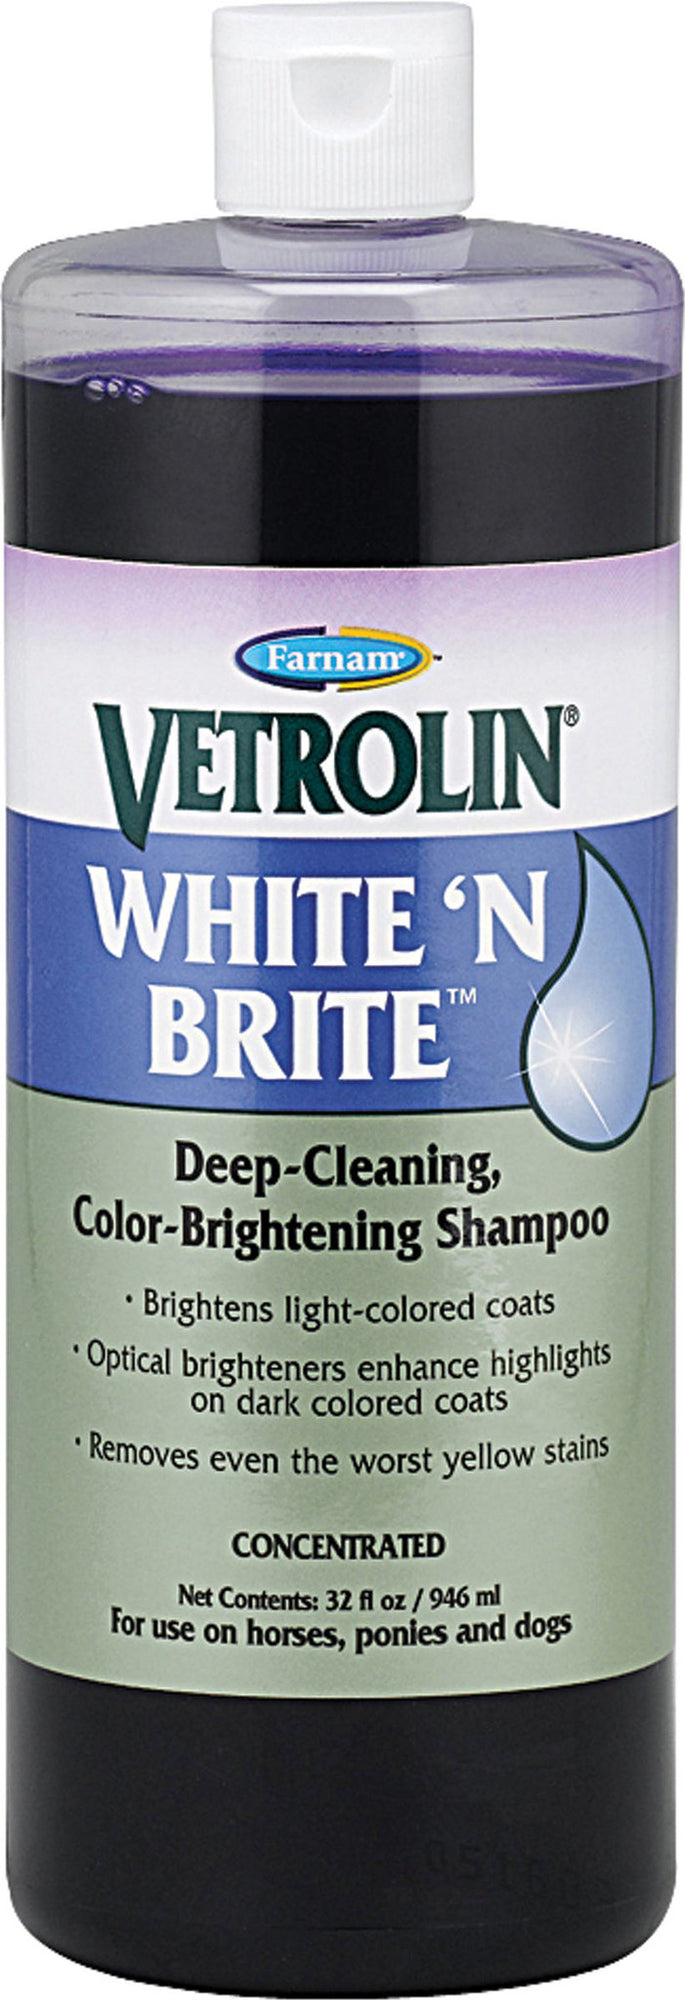 Vetrolin White N Brite Color Brightening Shampoo